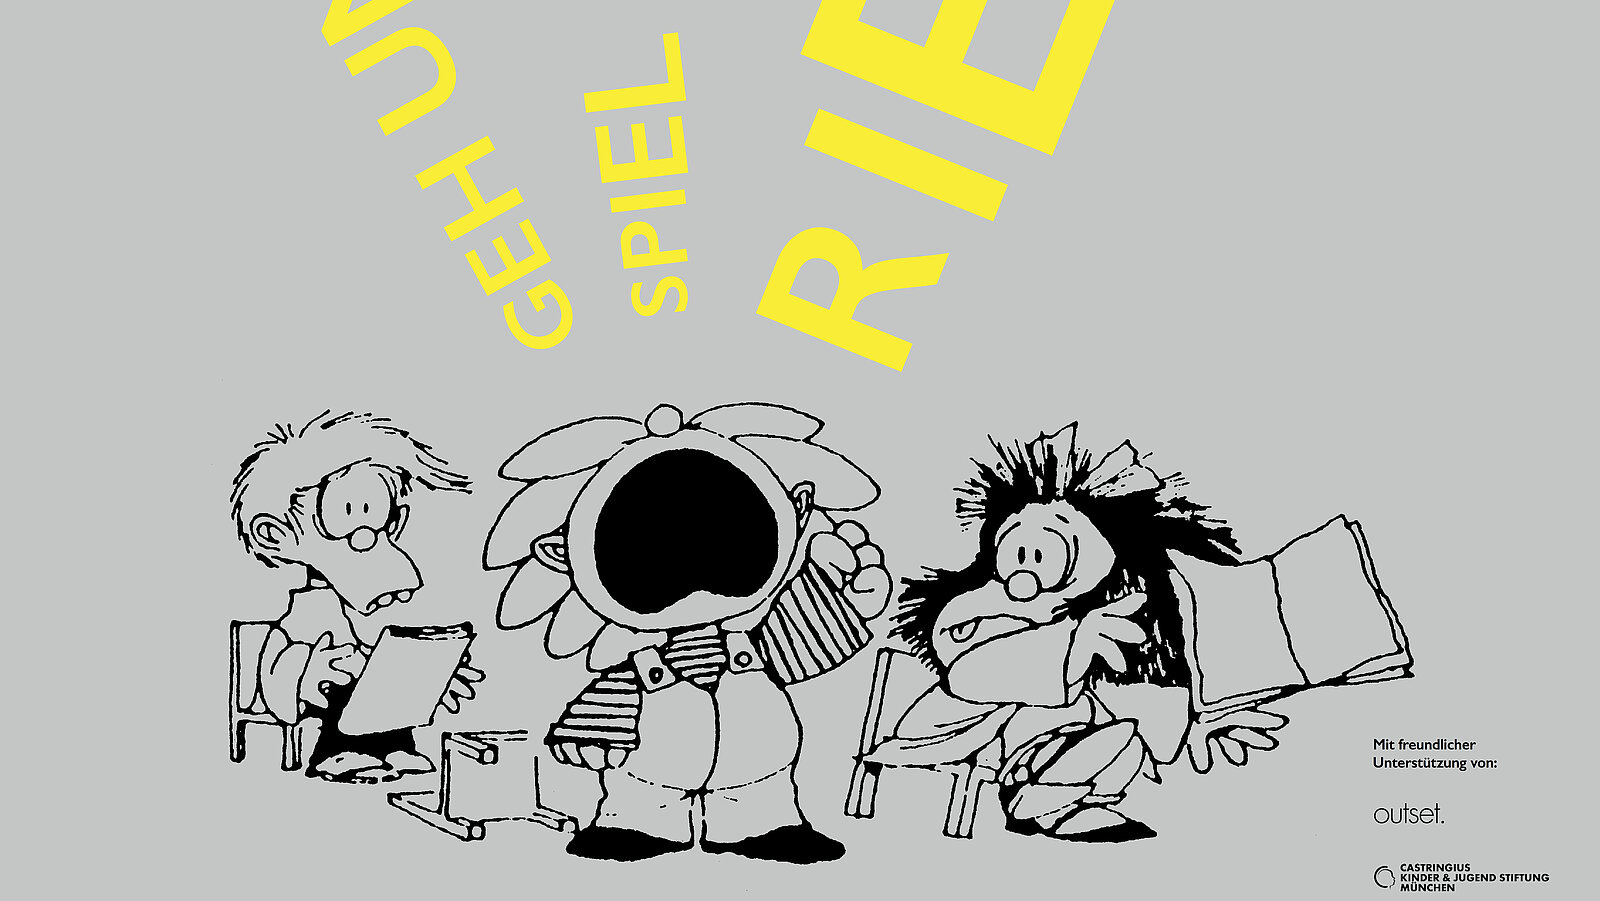 Mafalda und ihre Freunde © 1964, Joaquin S. Lavado (Quino) / Published by arrangement with Caminito S.a.s. Literary Agency Gestaltung: KMS TEAM München